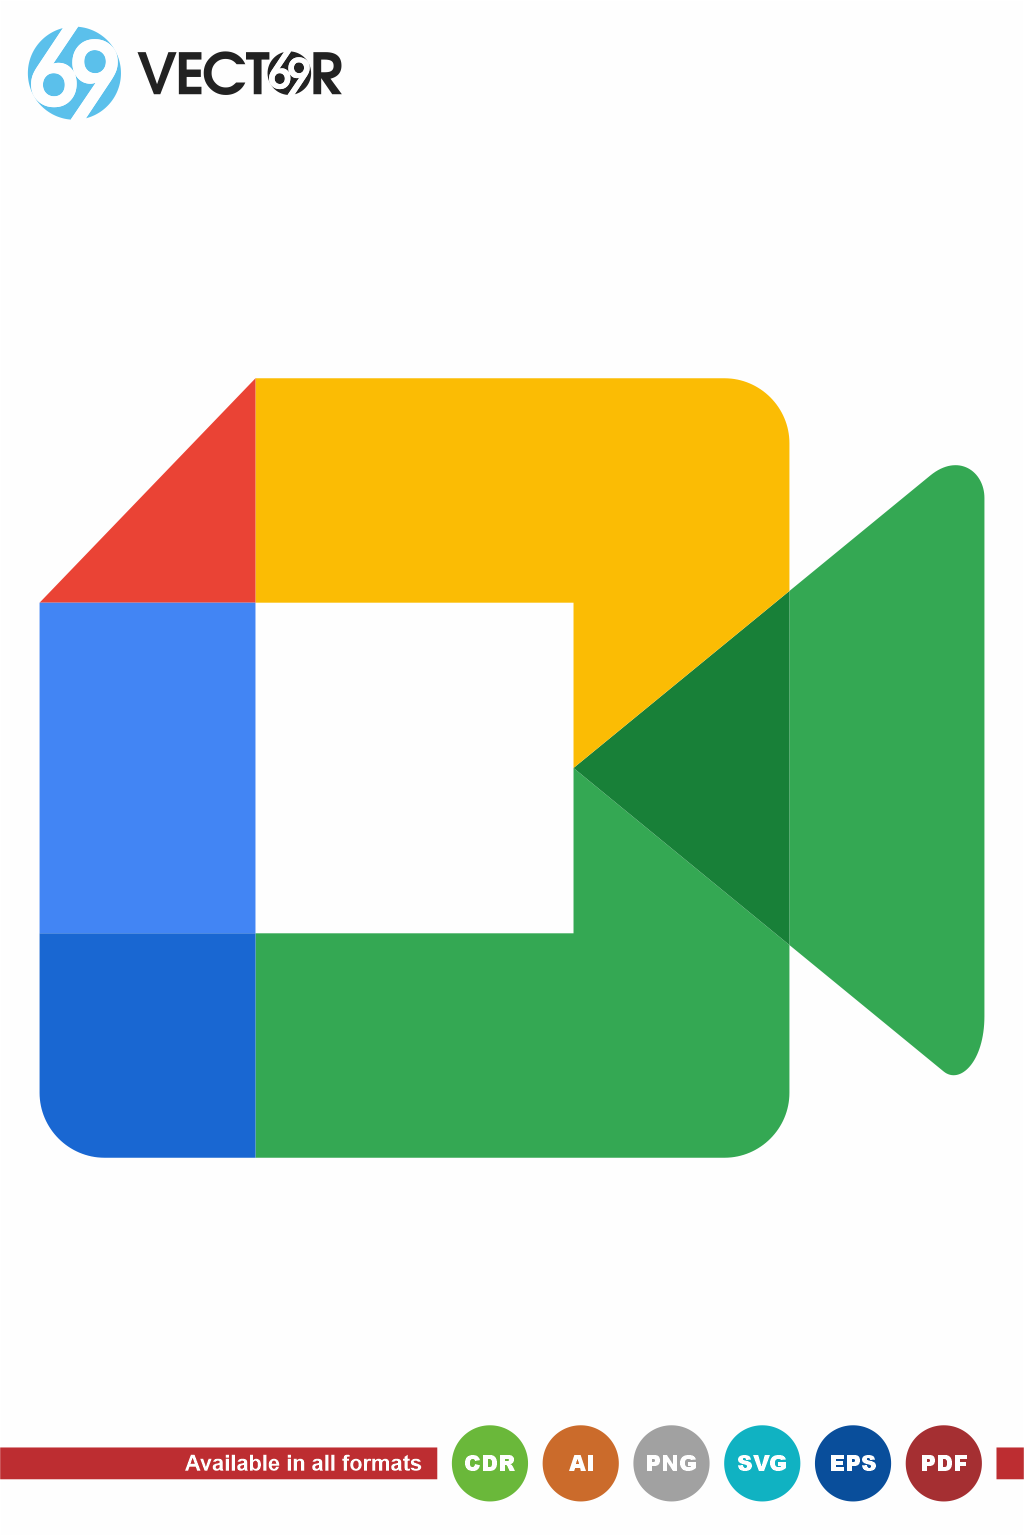 download google meet for windows